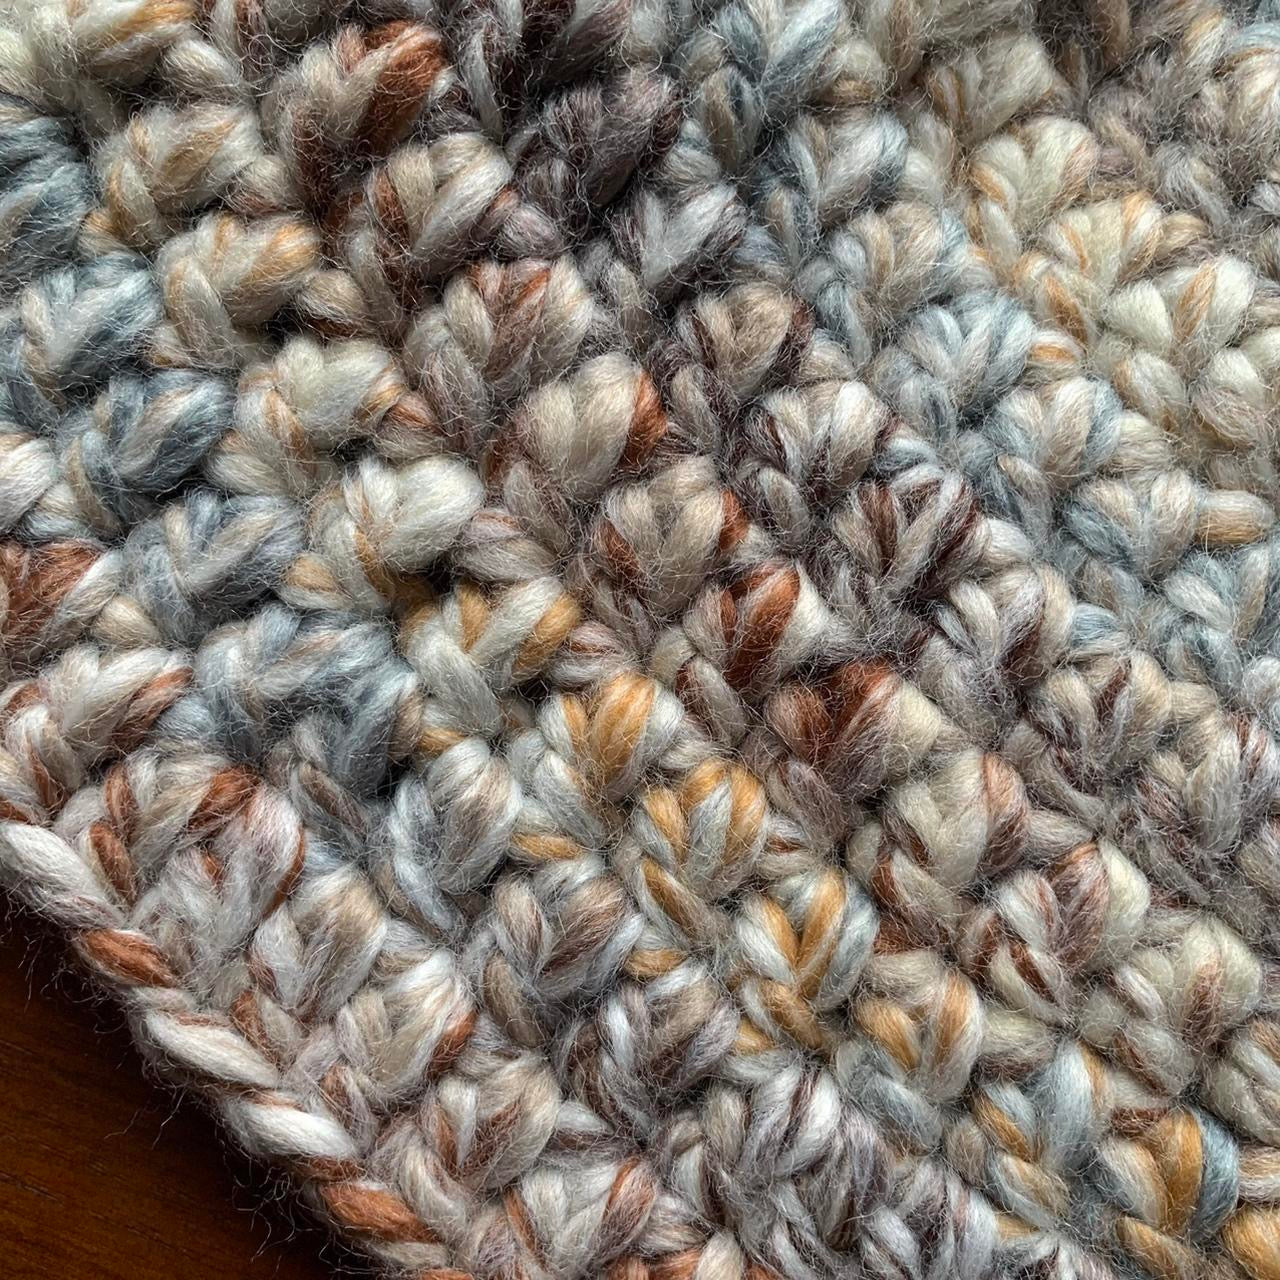 Chunky crochet bucket hat in beige, brown and cream